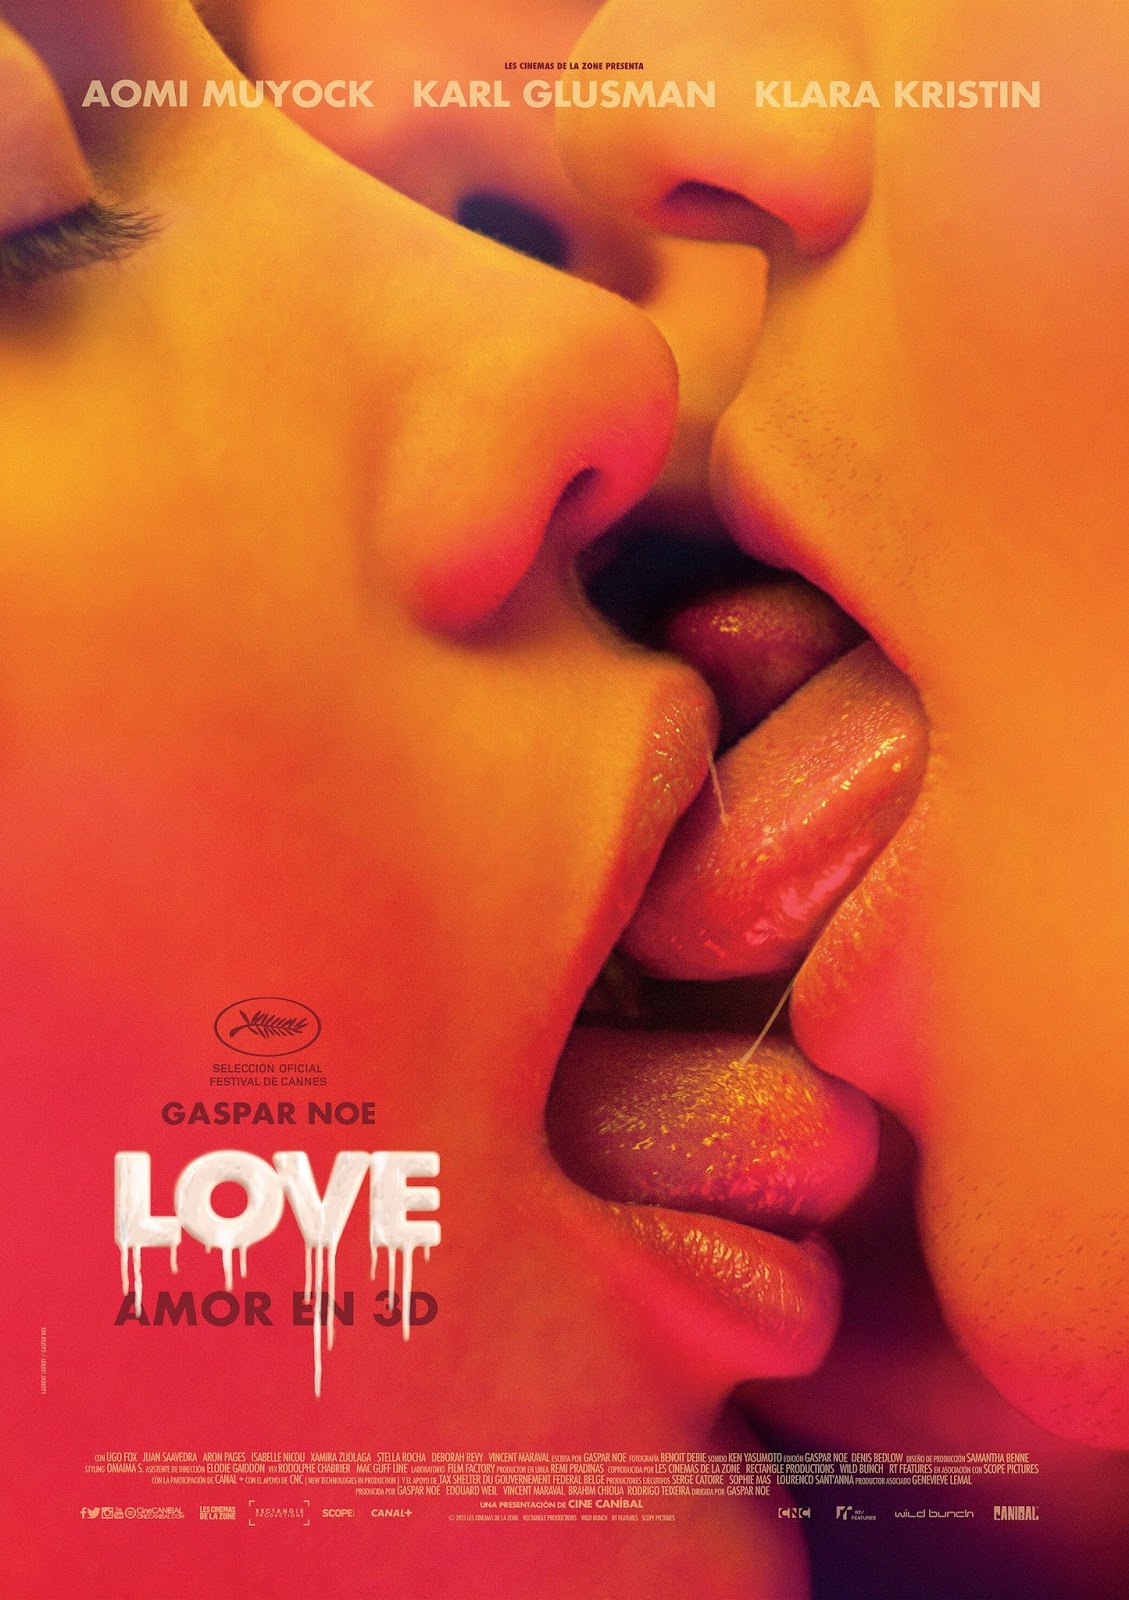 LOVE (2015) ความรัก